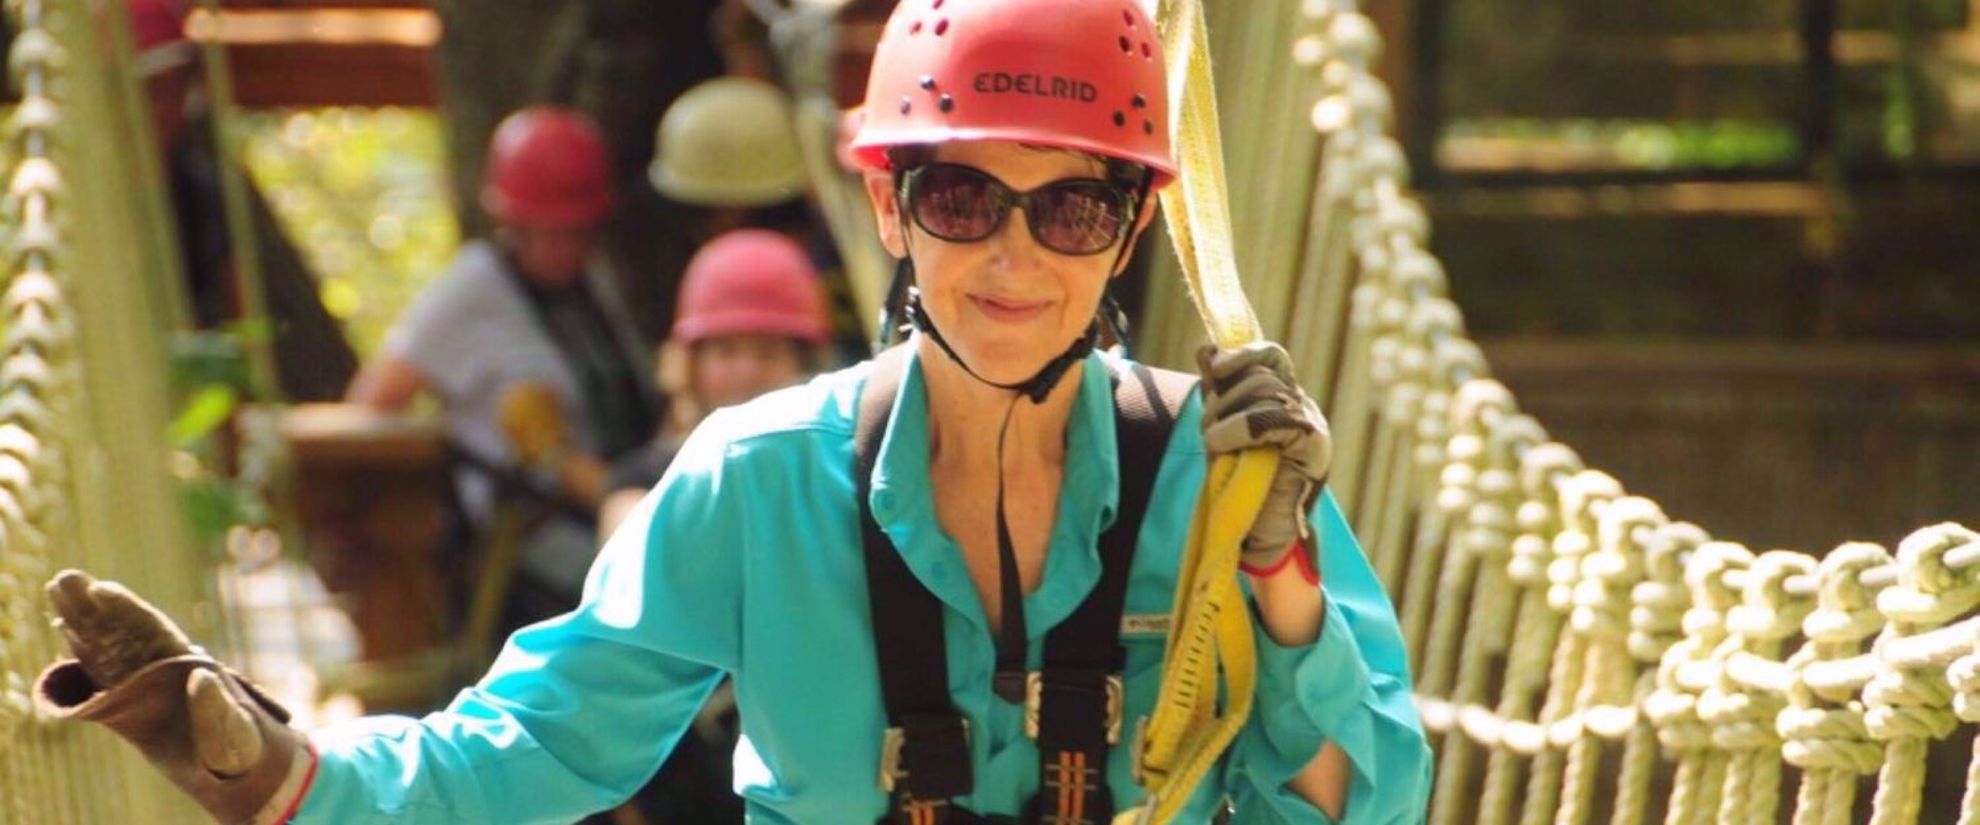 Woman crossing suspension bridge, smiling with red helmet